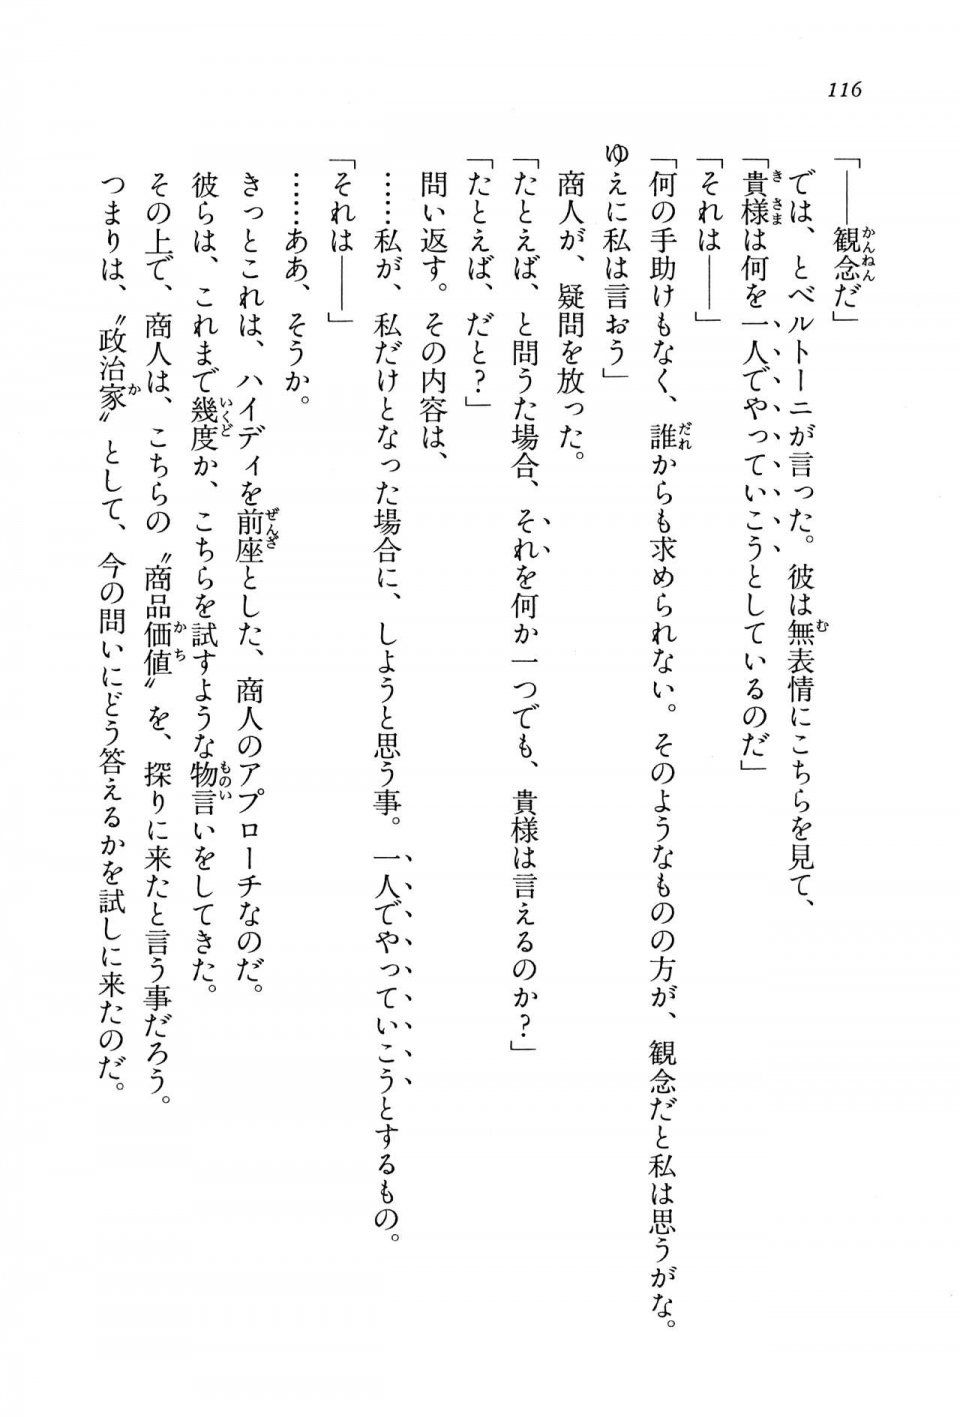 Kyoukai Senjou no Horizon BD Special Mininovel Vol 8(4B) - Photo #120